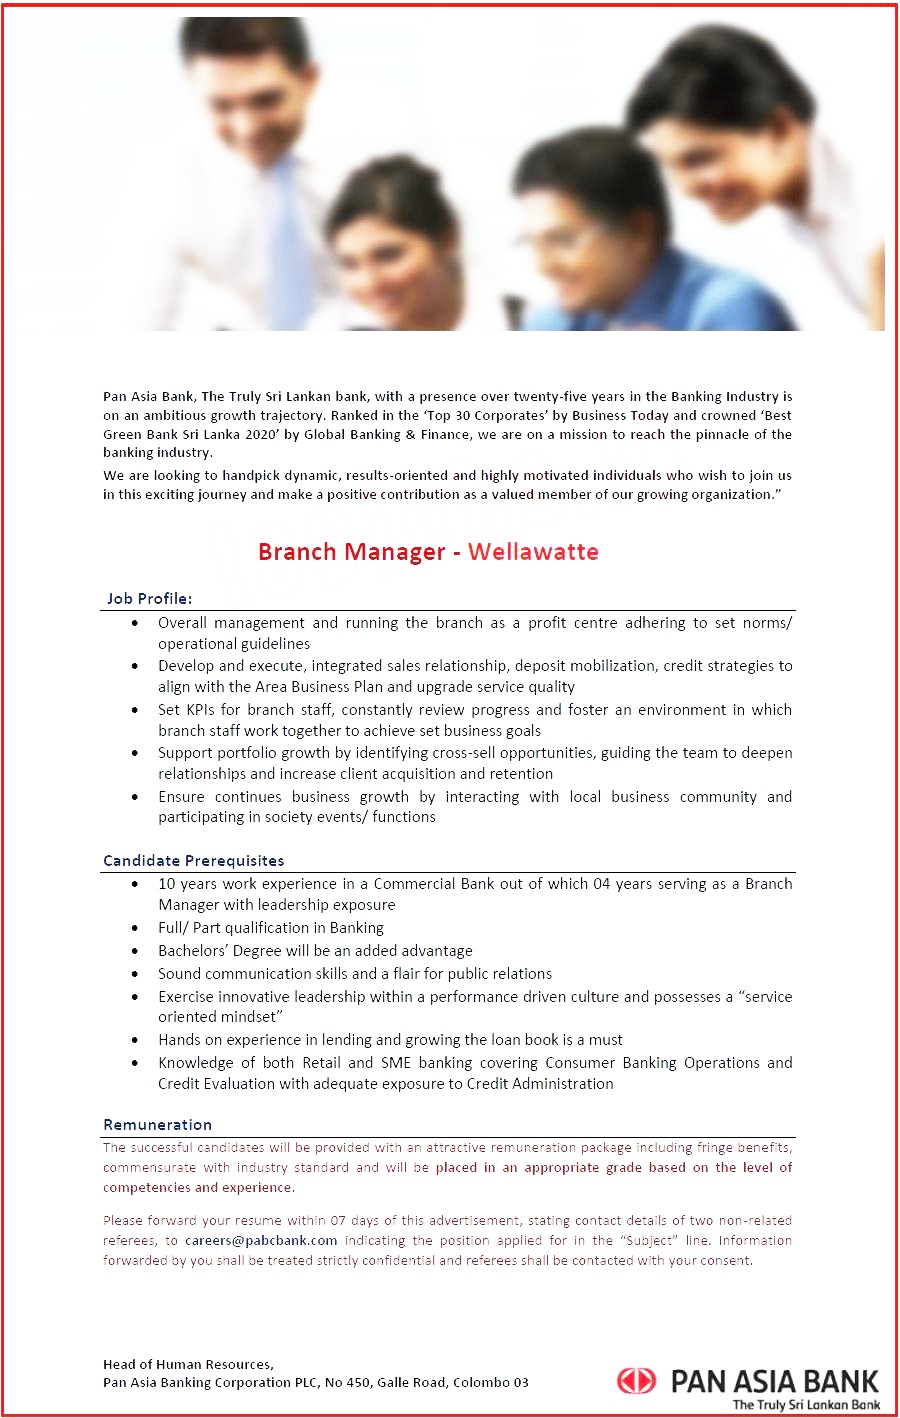 Pan Asia Bank Wellawatta Branch Manager Vacancy